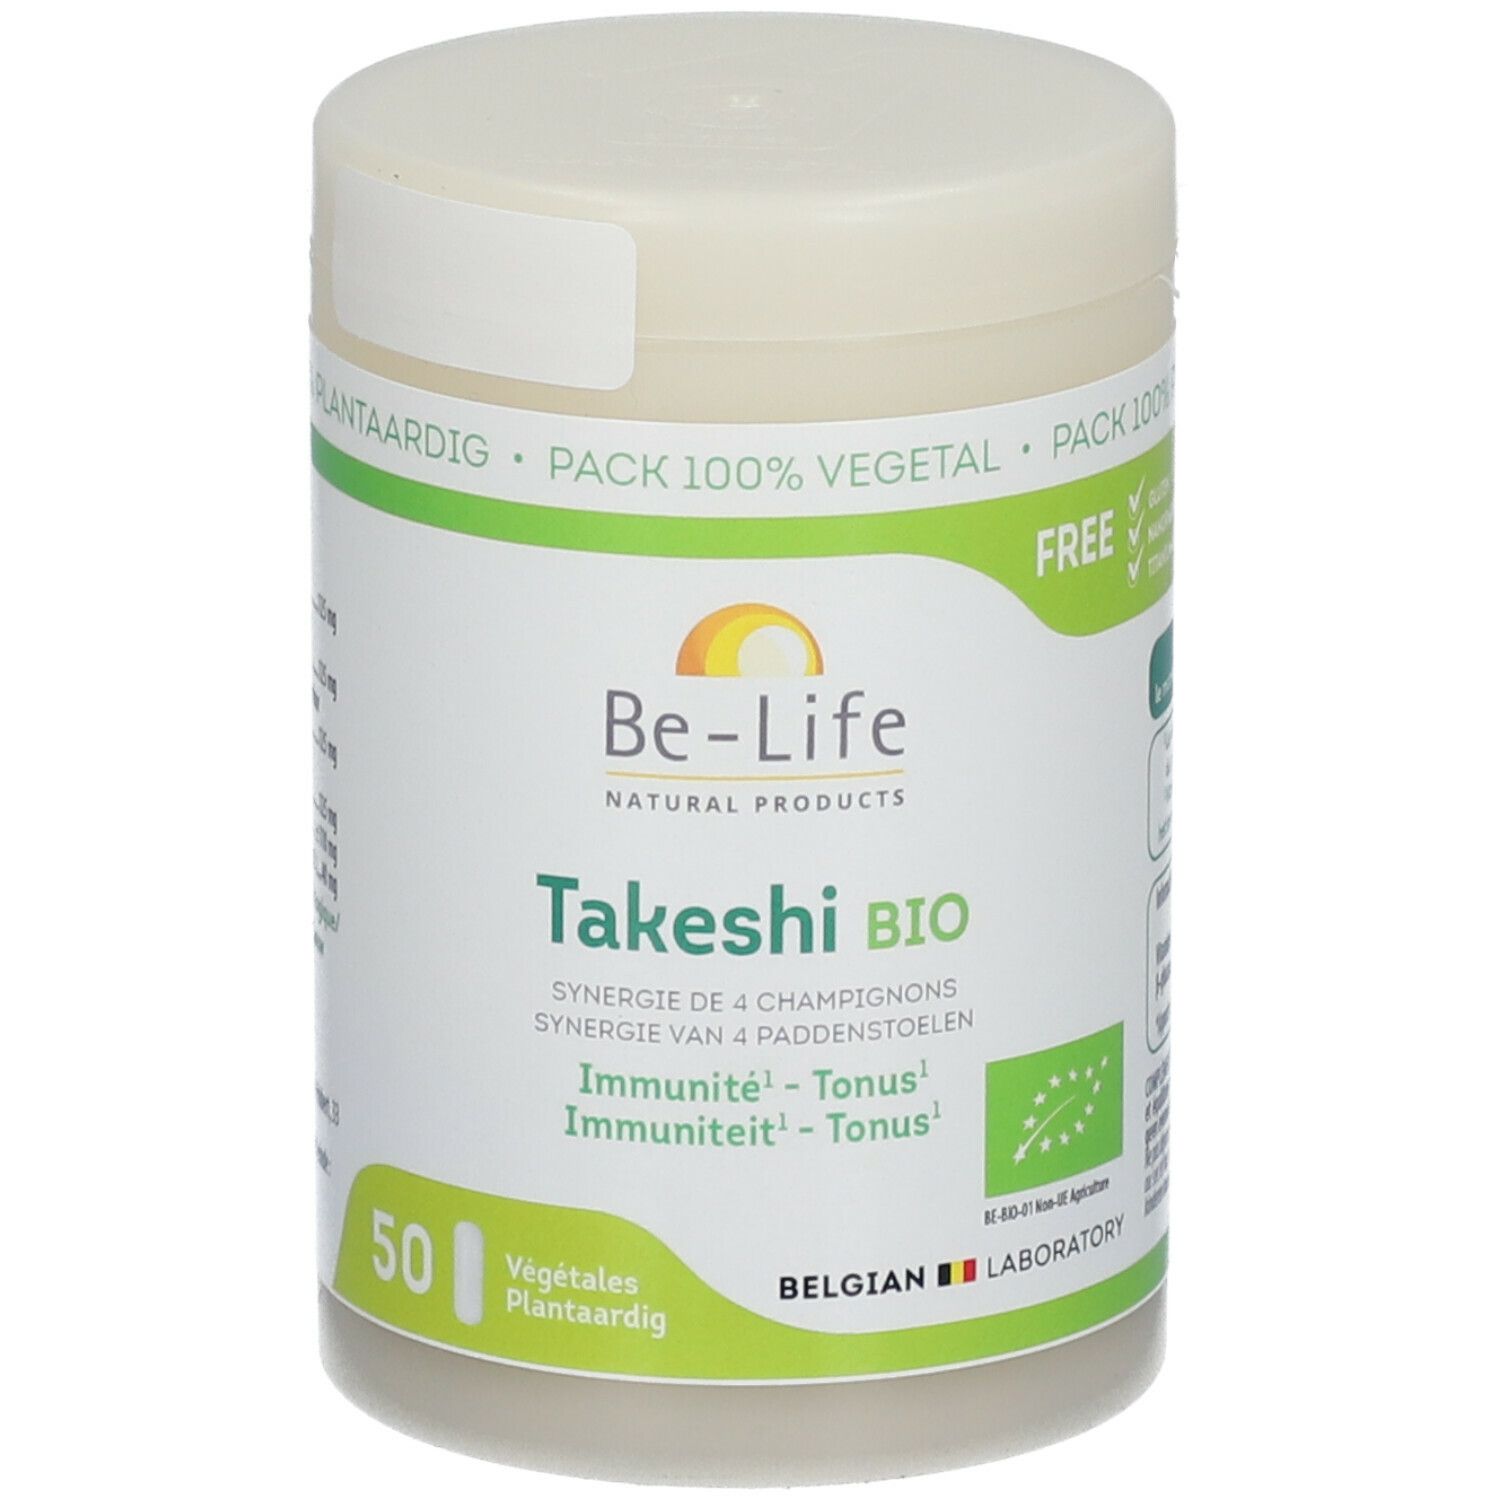 Be-Life Takeshi BIO